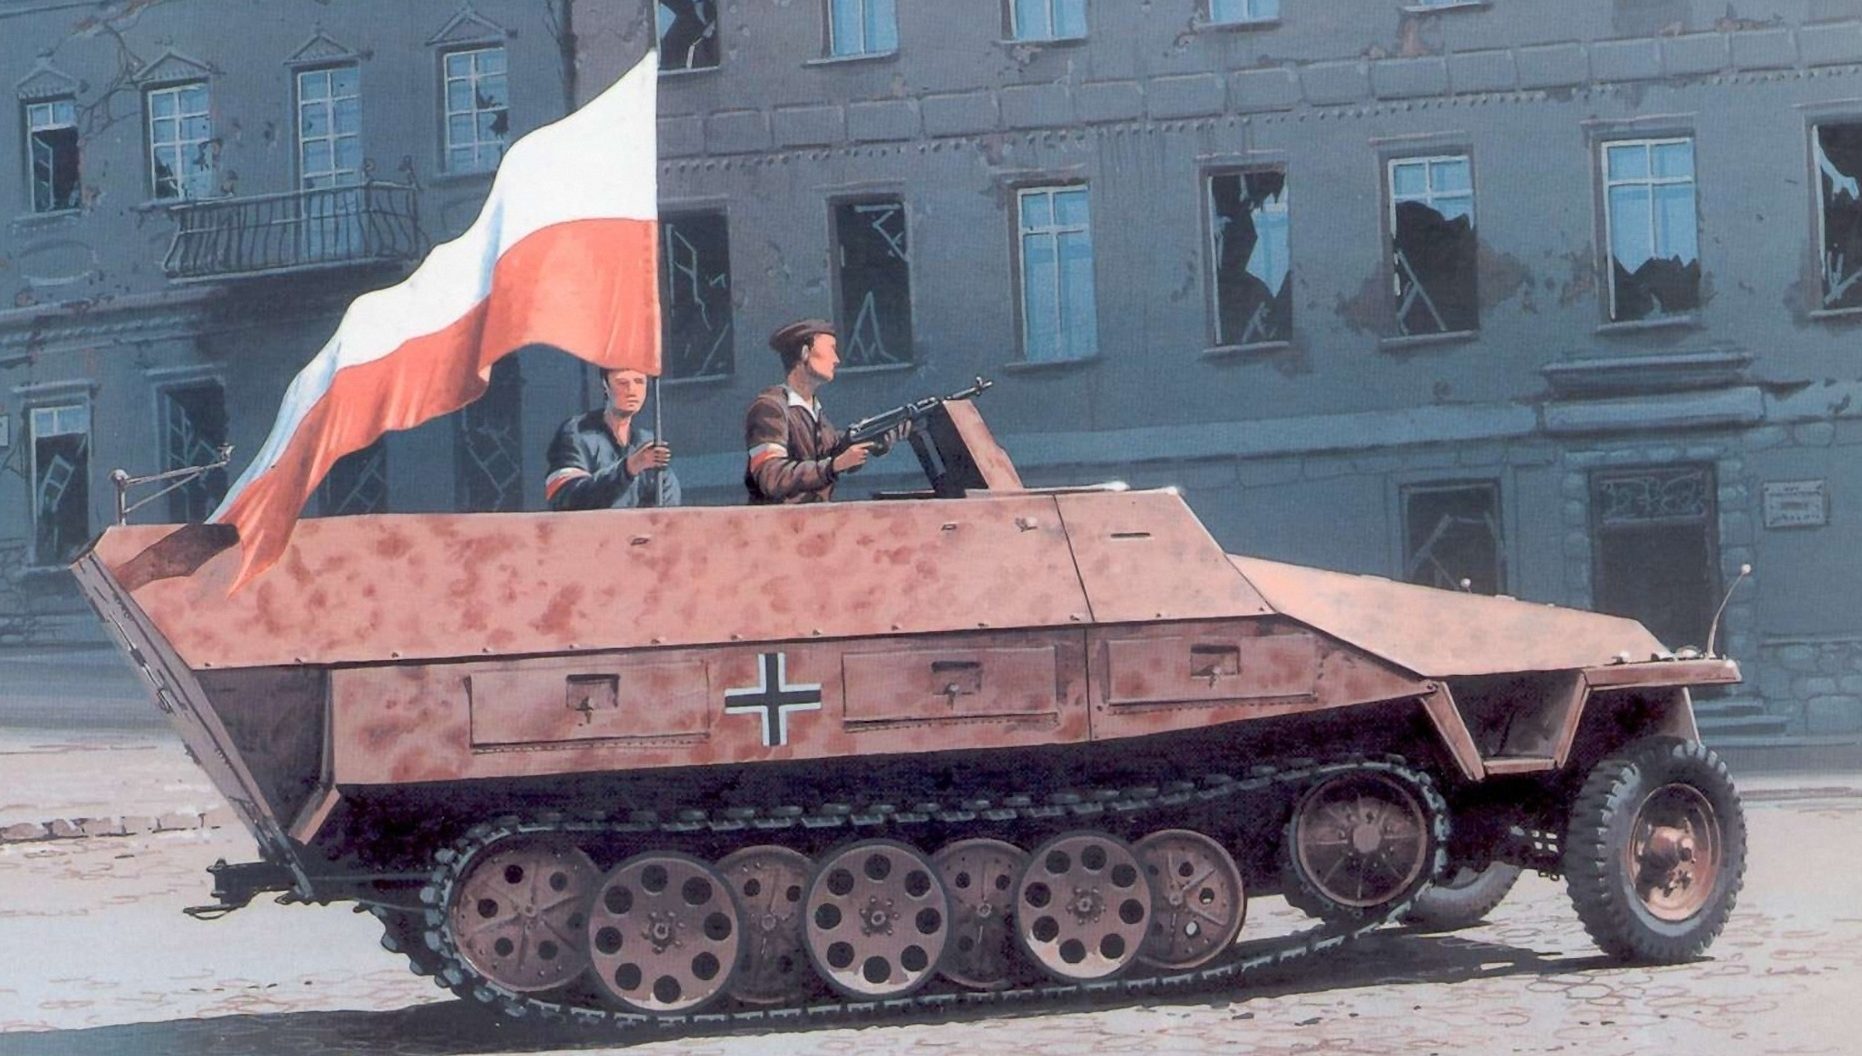 Wróbel Arkadiusz. Полугусеничный бронетранспортер Sd.Kfz. 251 Ausf. D.